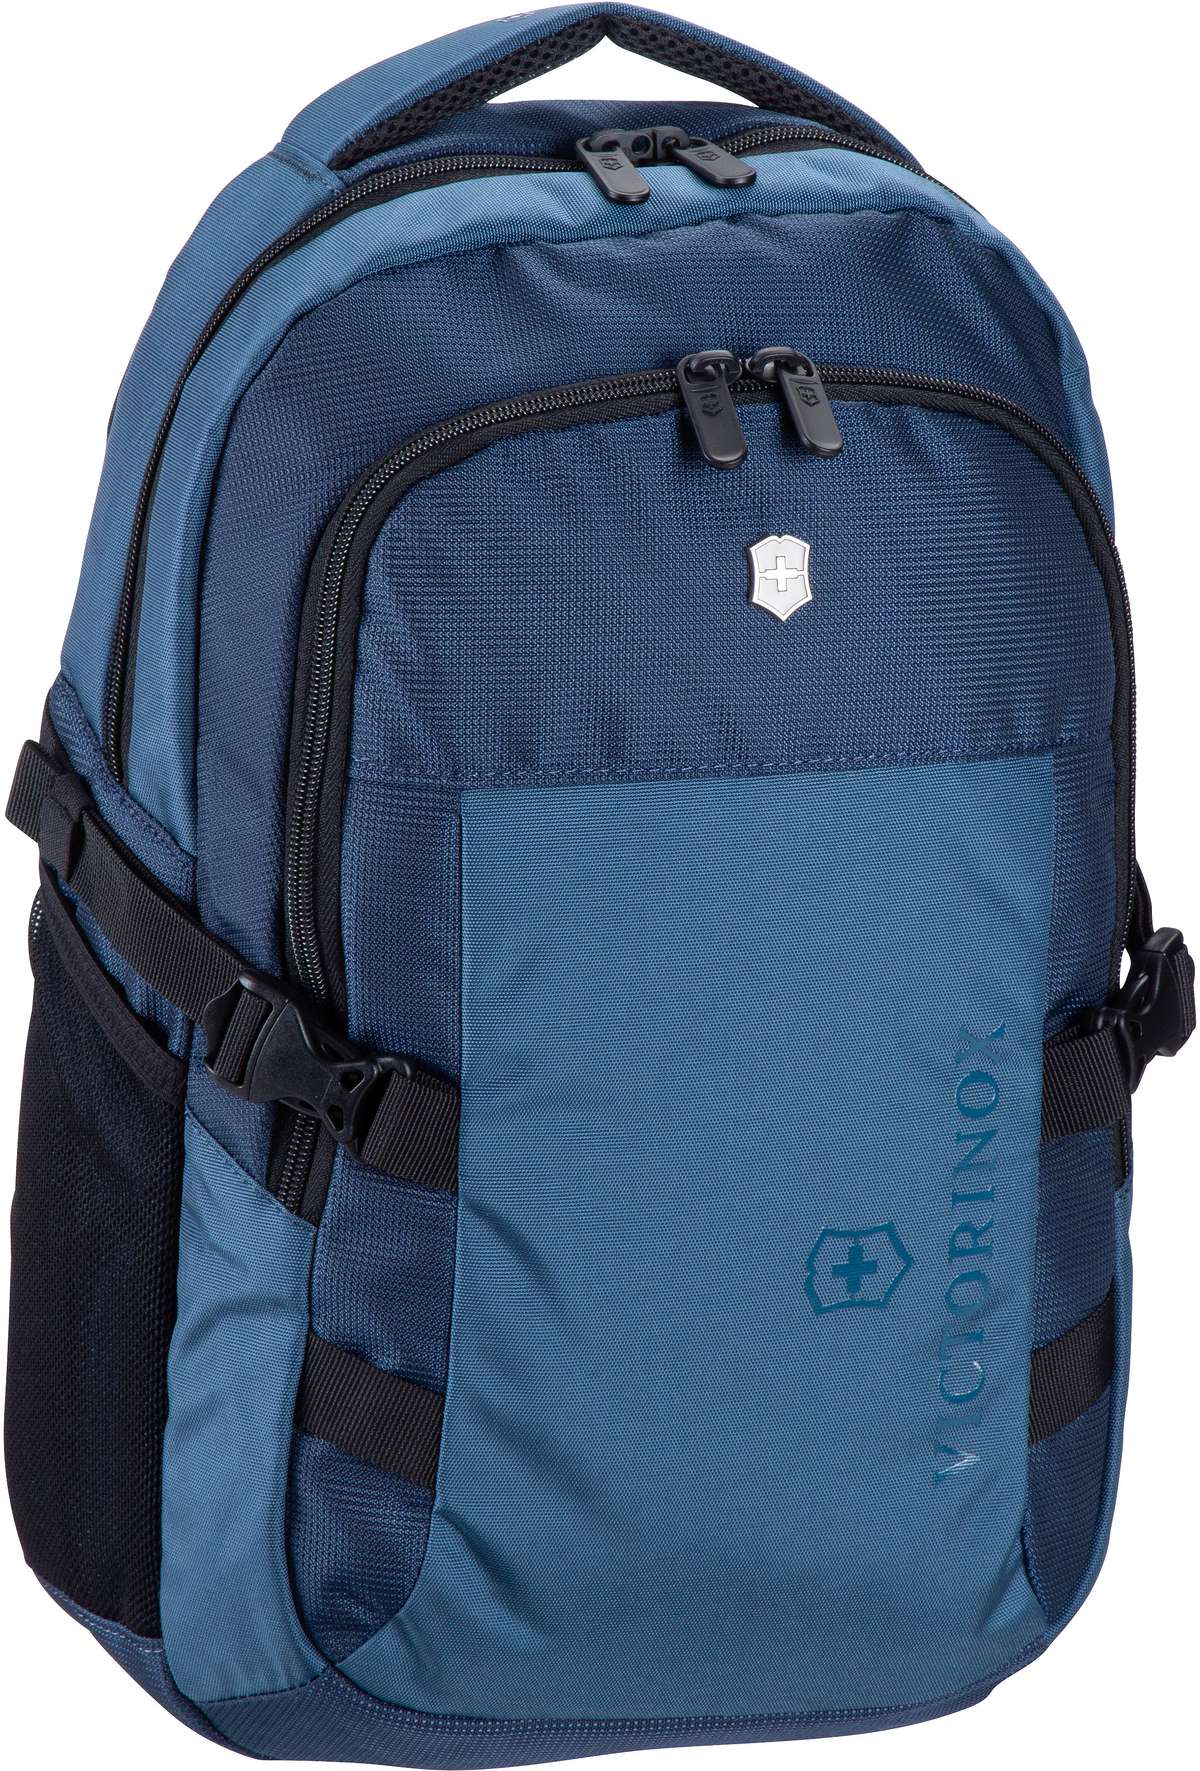 Victorinox Vx Sport EVO Compact Backpack  in Navy (20 Liter), Rucksack / Backpack